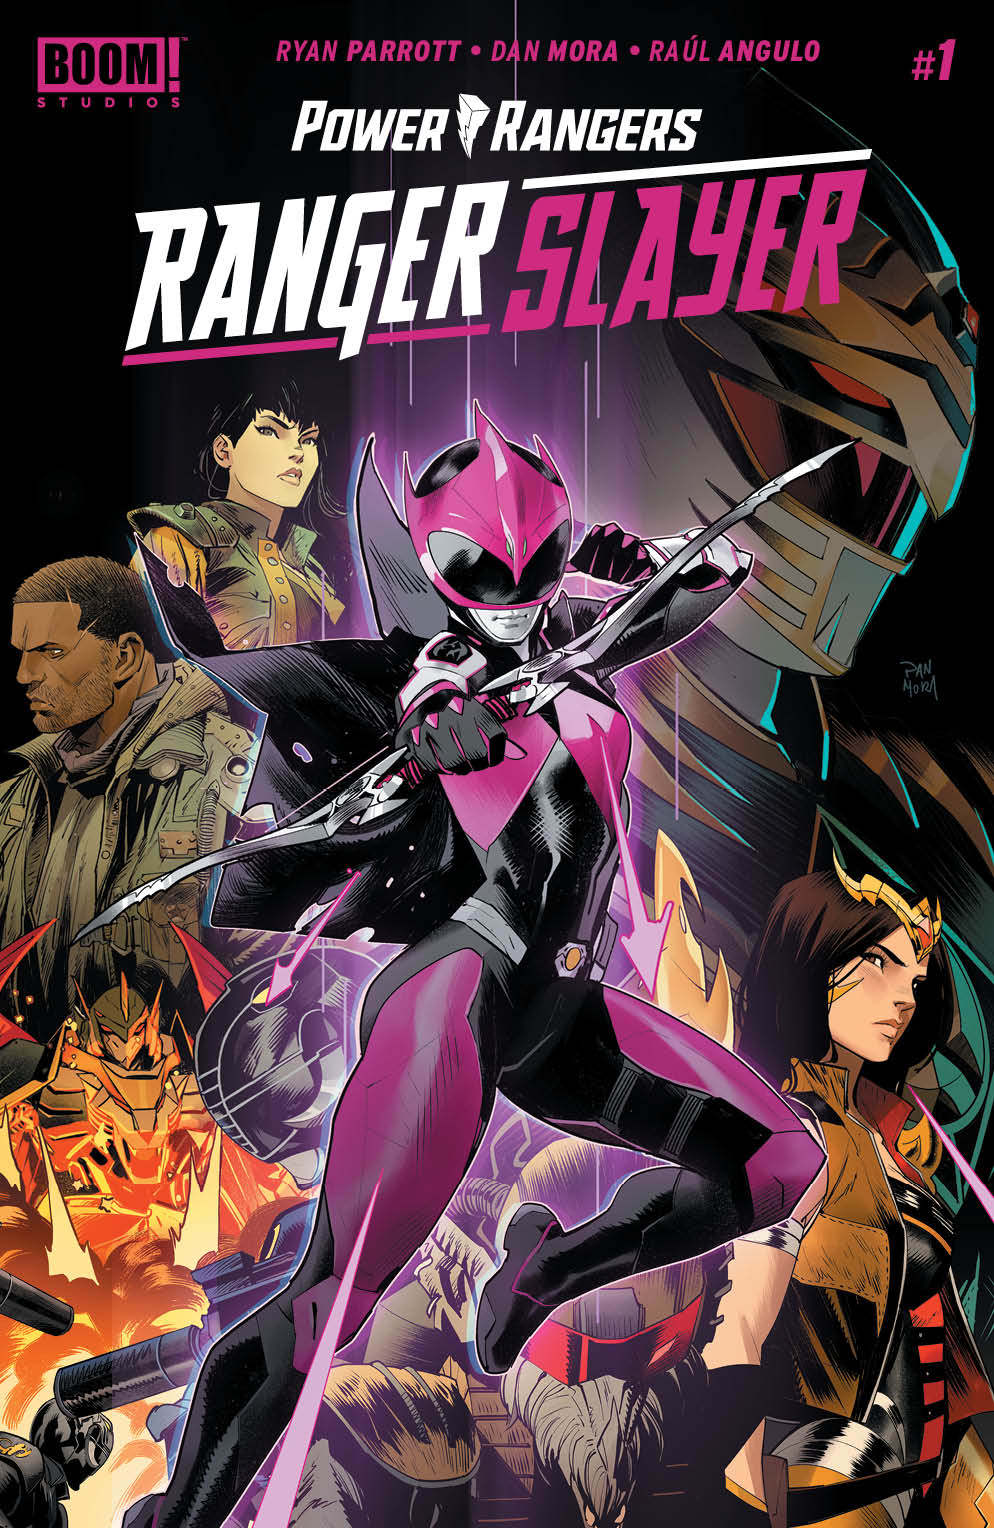 Power Rangers: Ranger Slayer #1 (BOOM! Studios) - New Comics